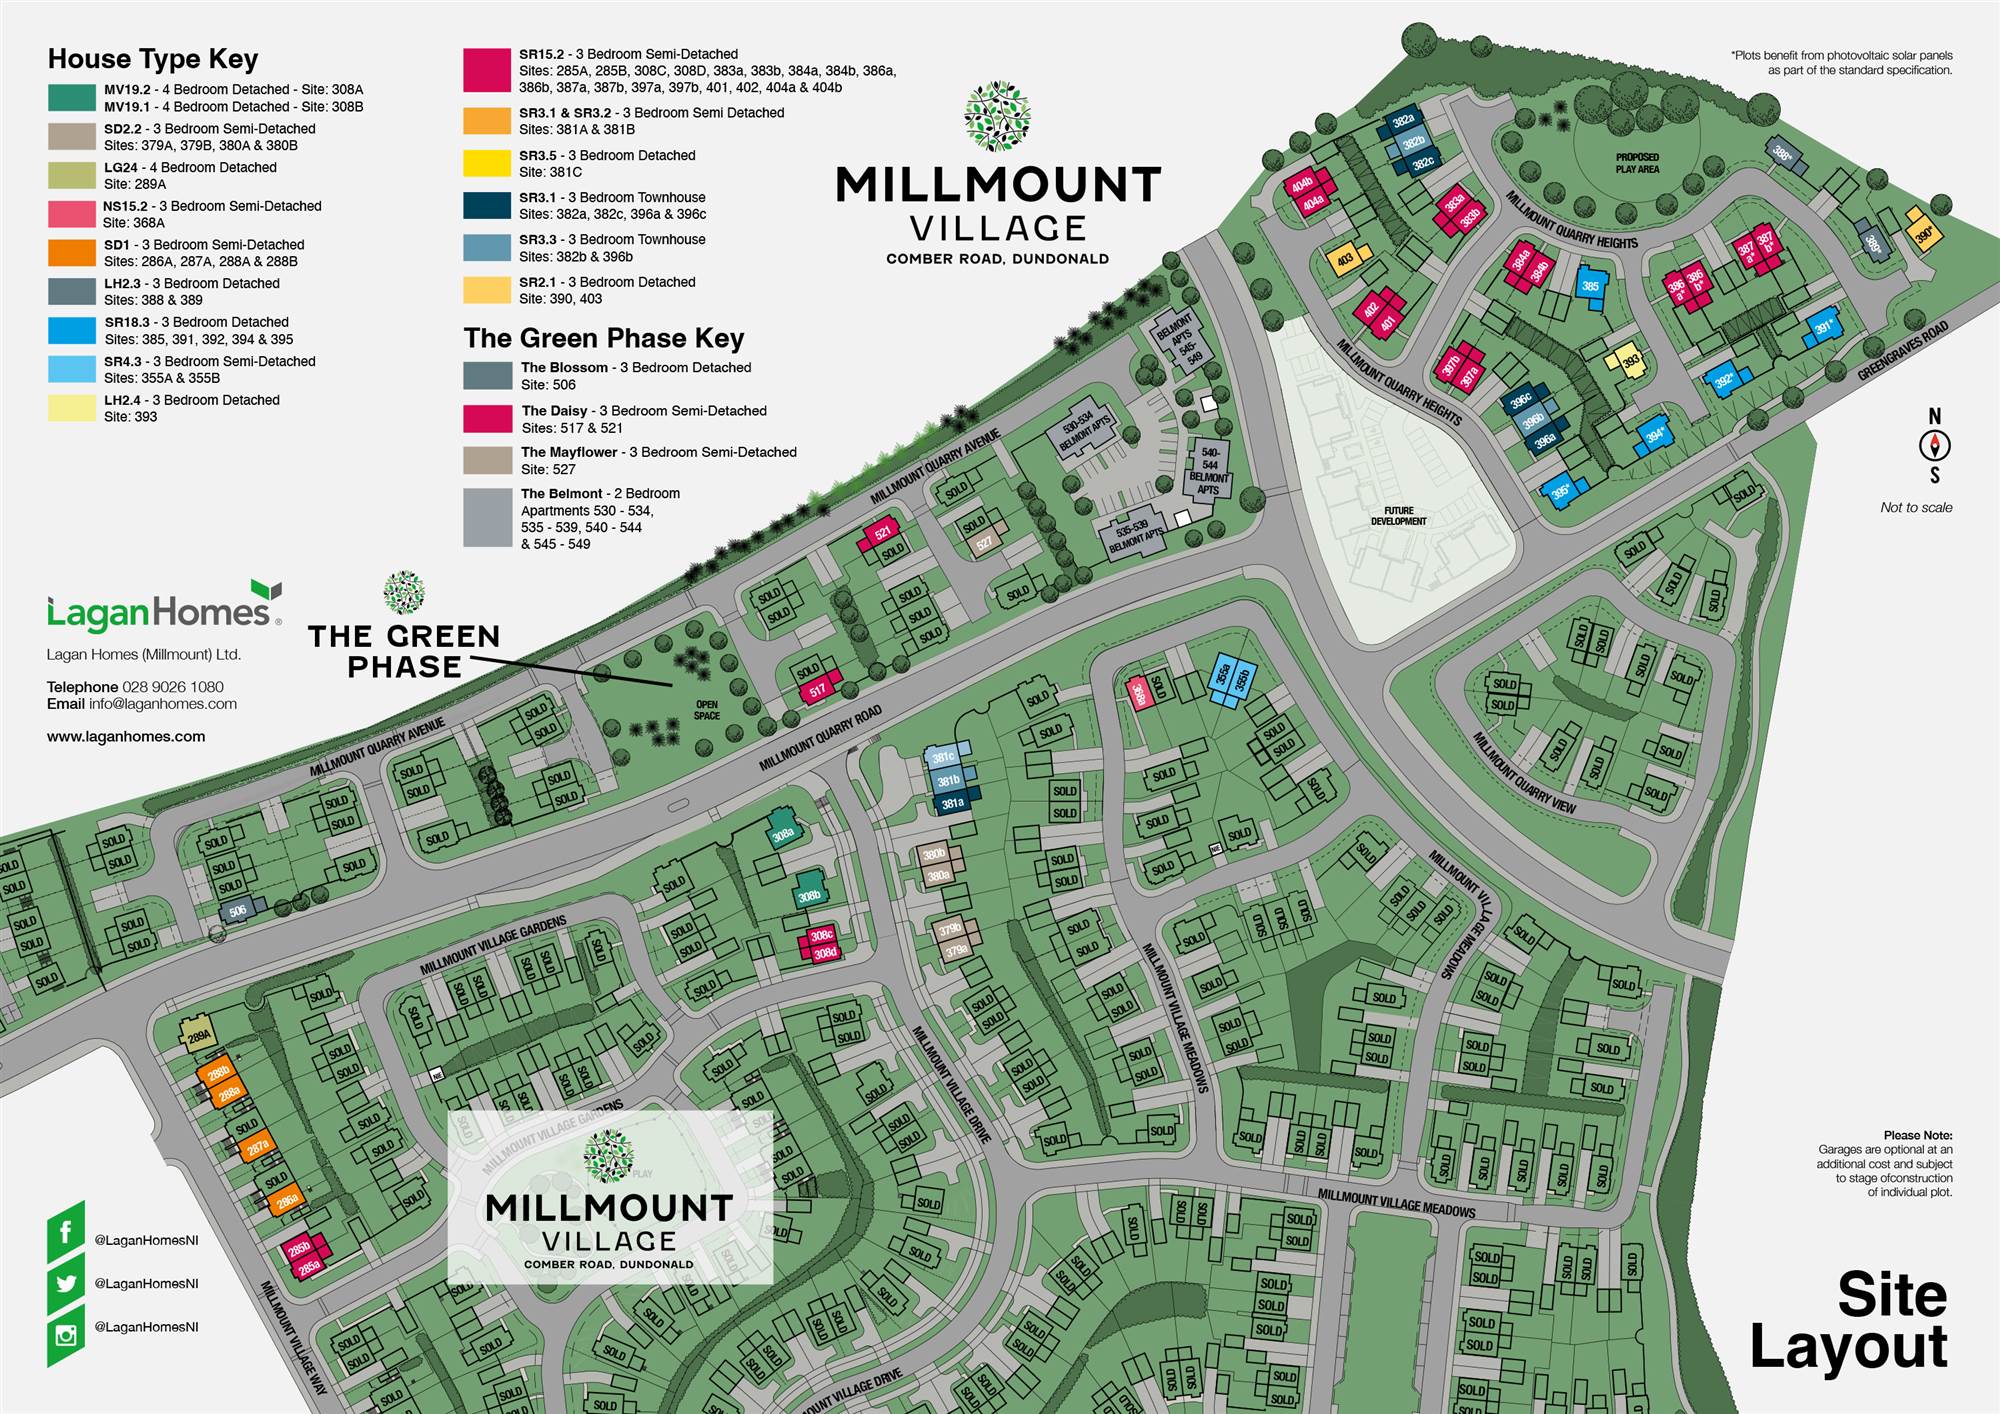 402 Millmount Village